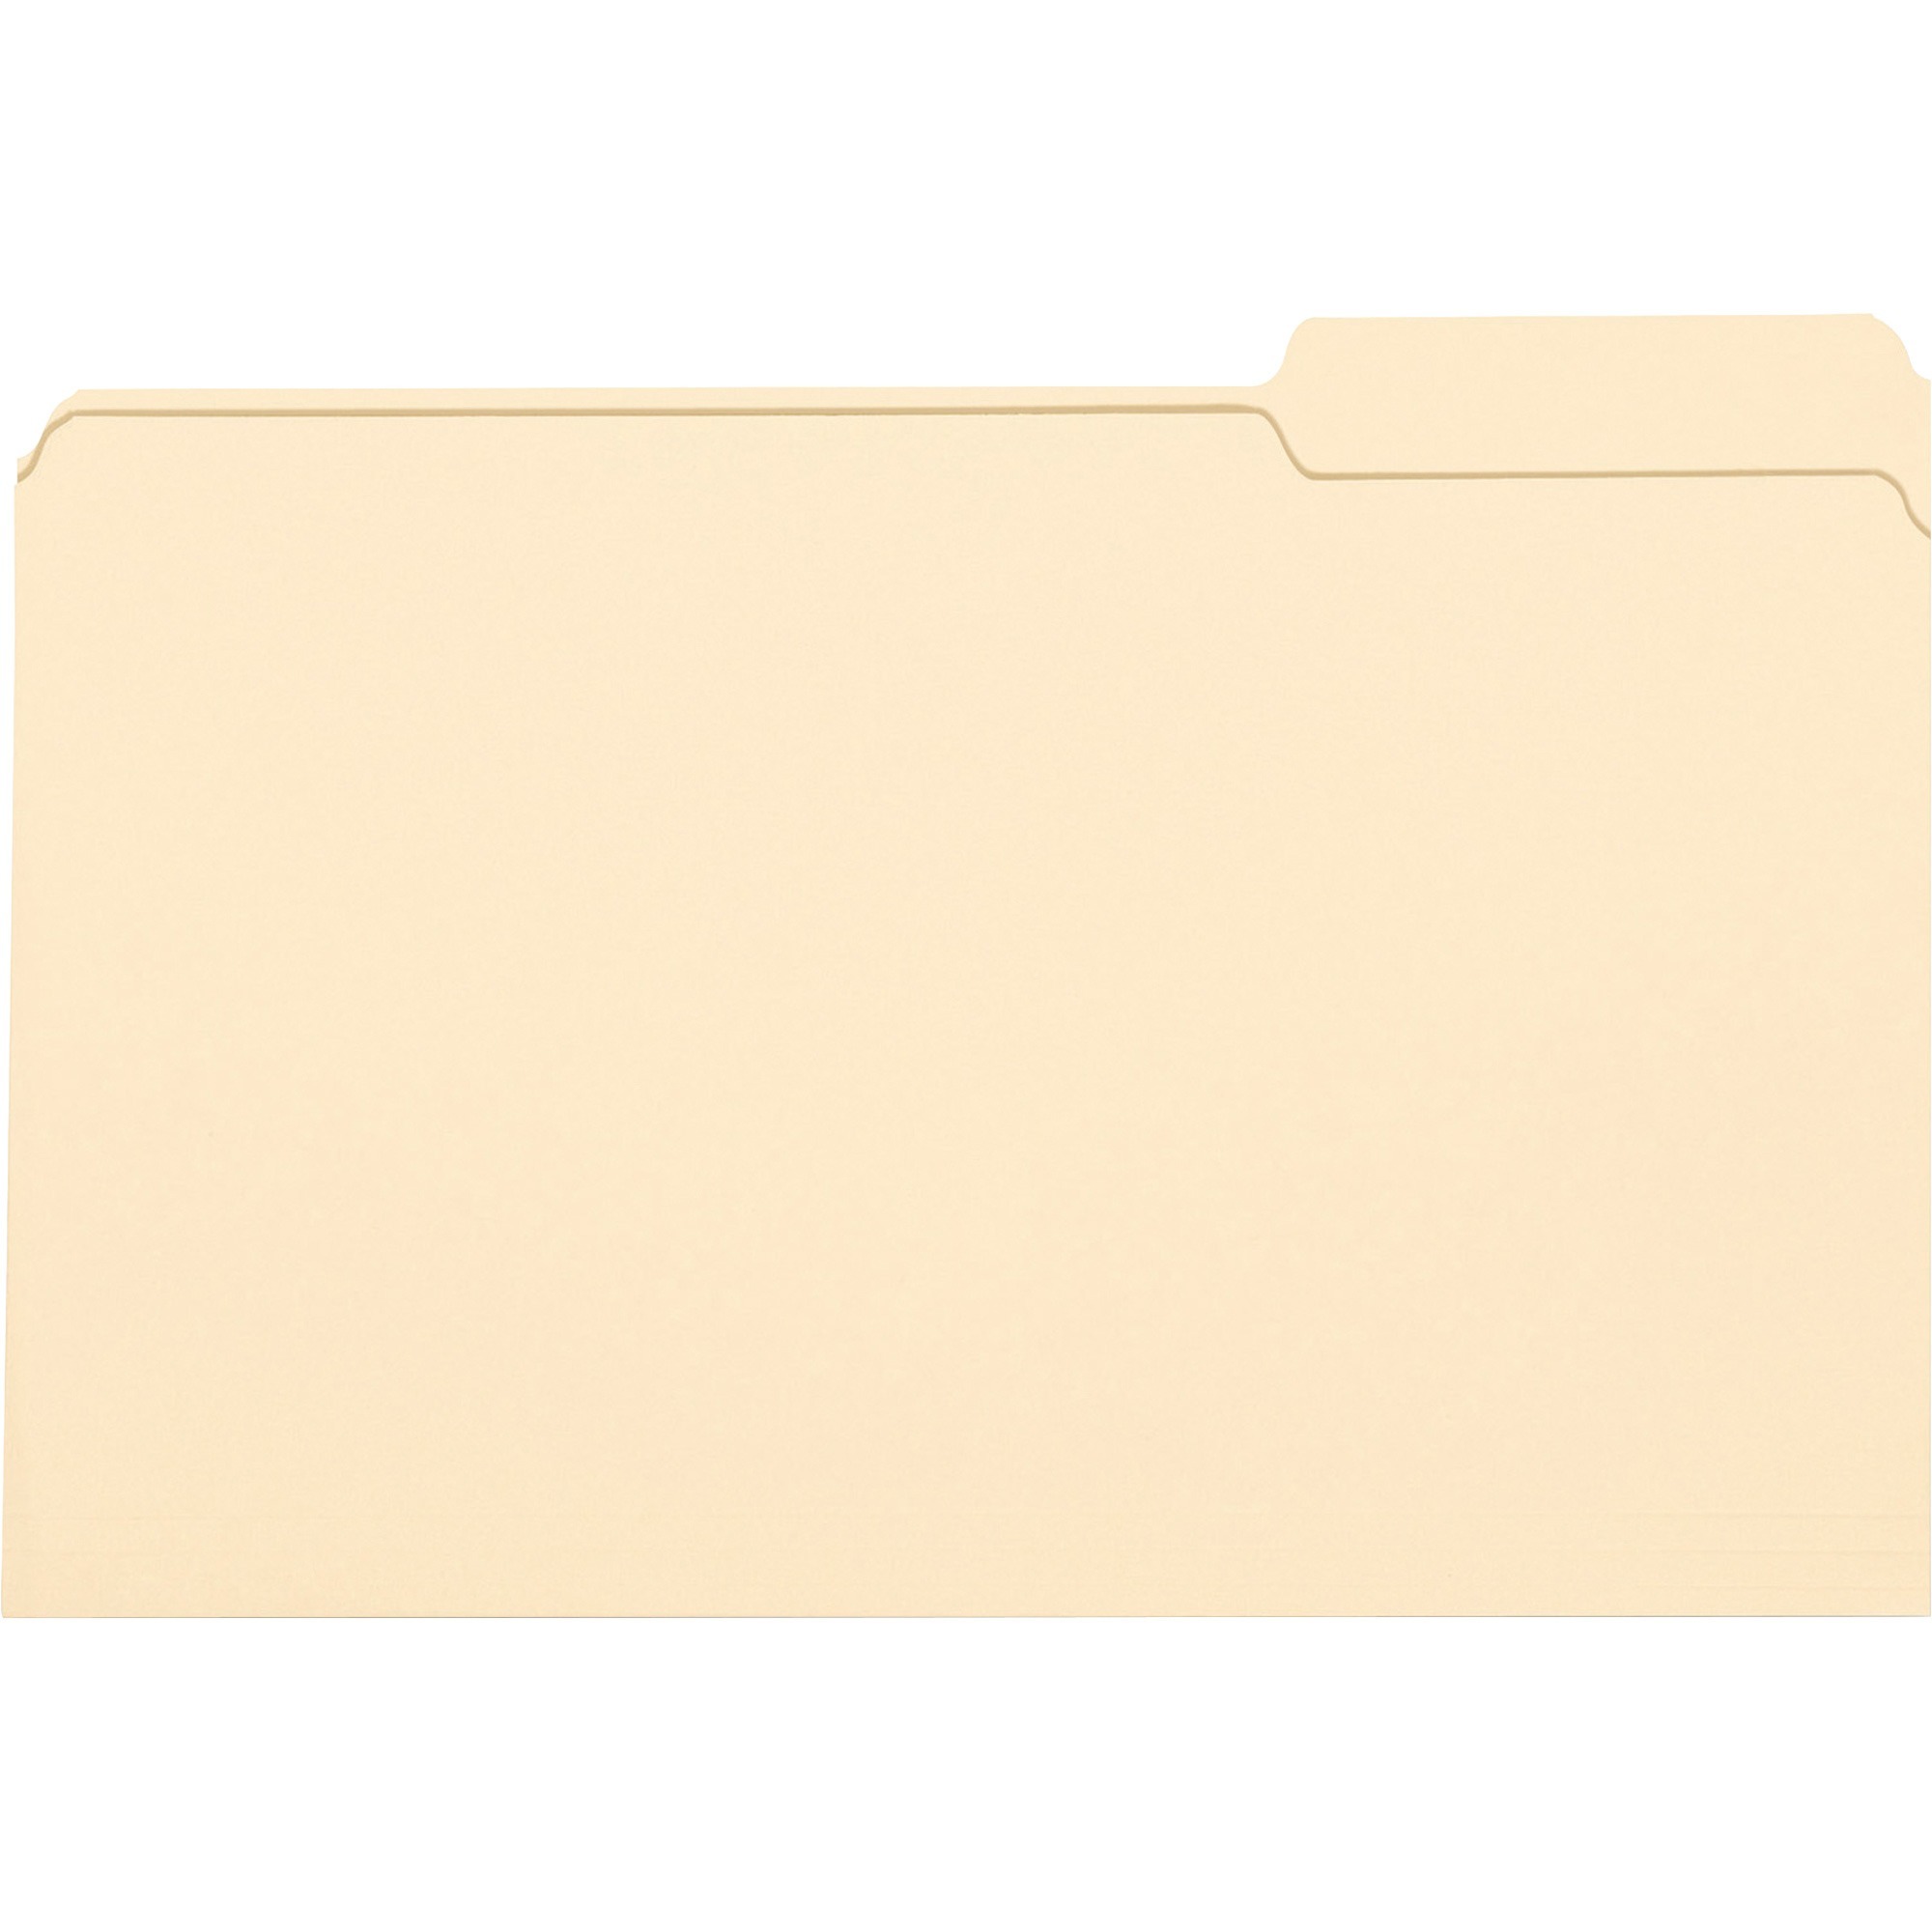 File Folders, 1/3 Cut Third Position, One-Ply Top Tab, Legal, Manila, 100/Box